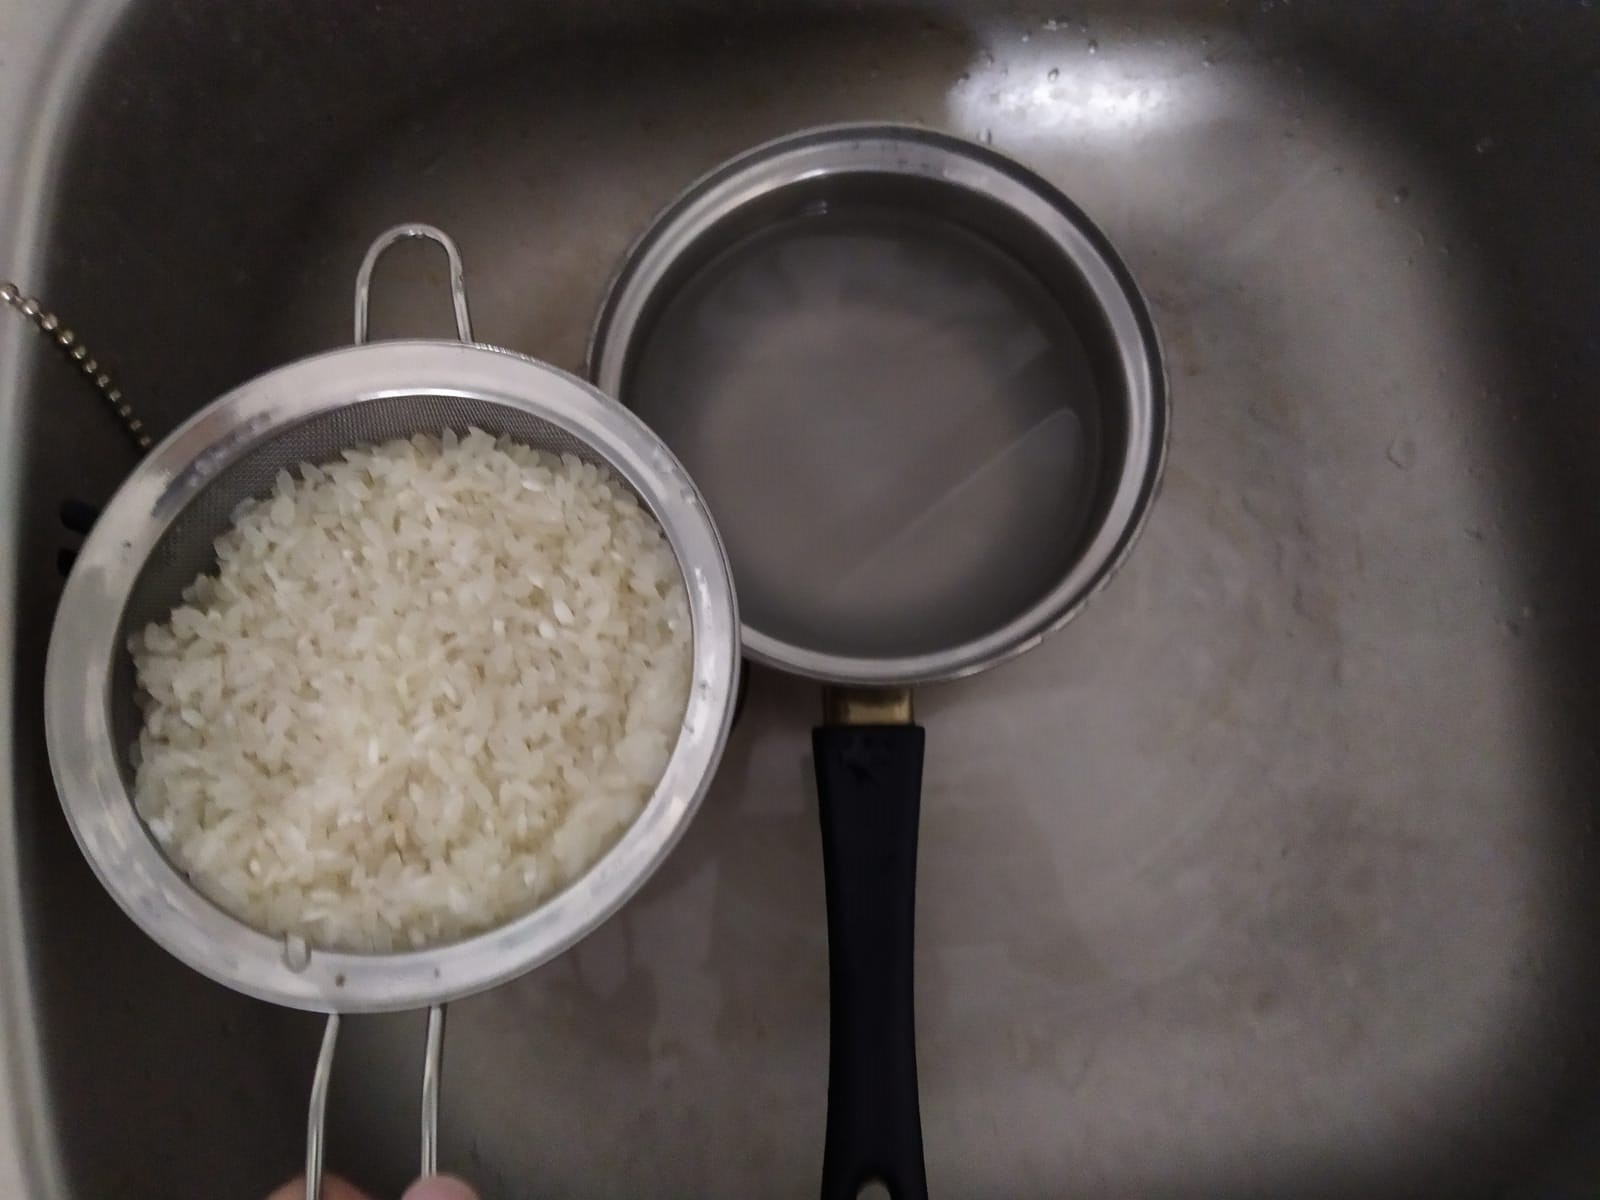  wash drain rice 